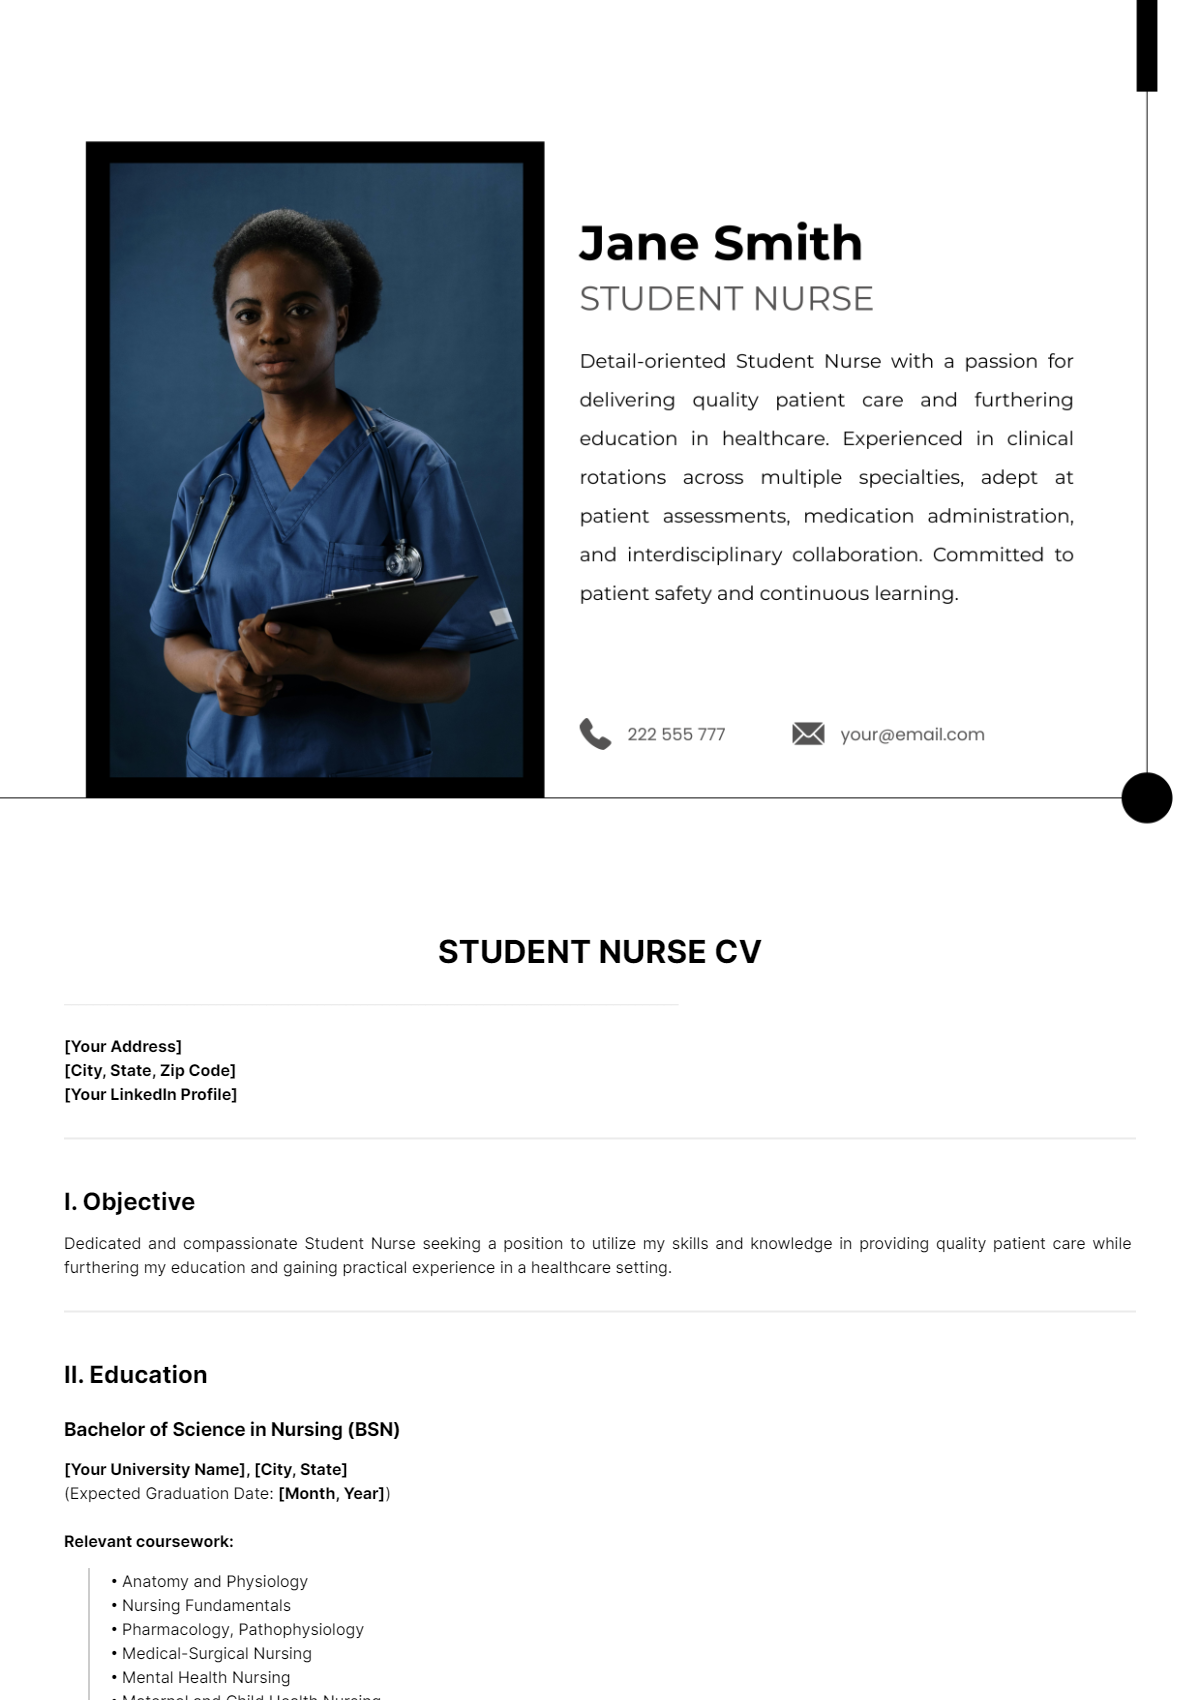 Free Student Nurse CV Template